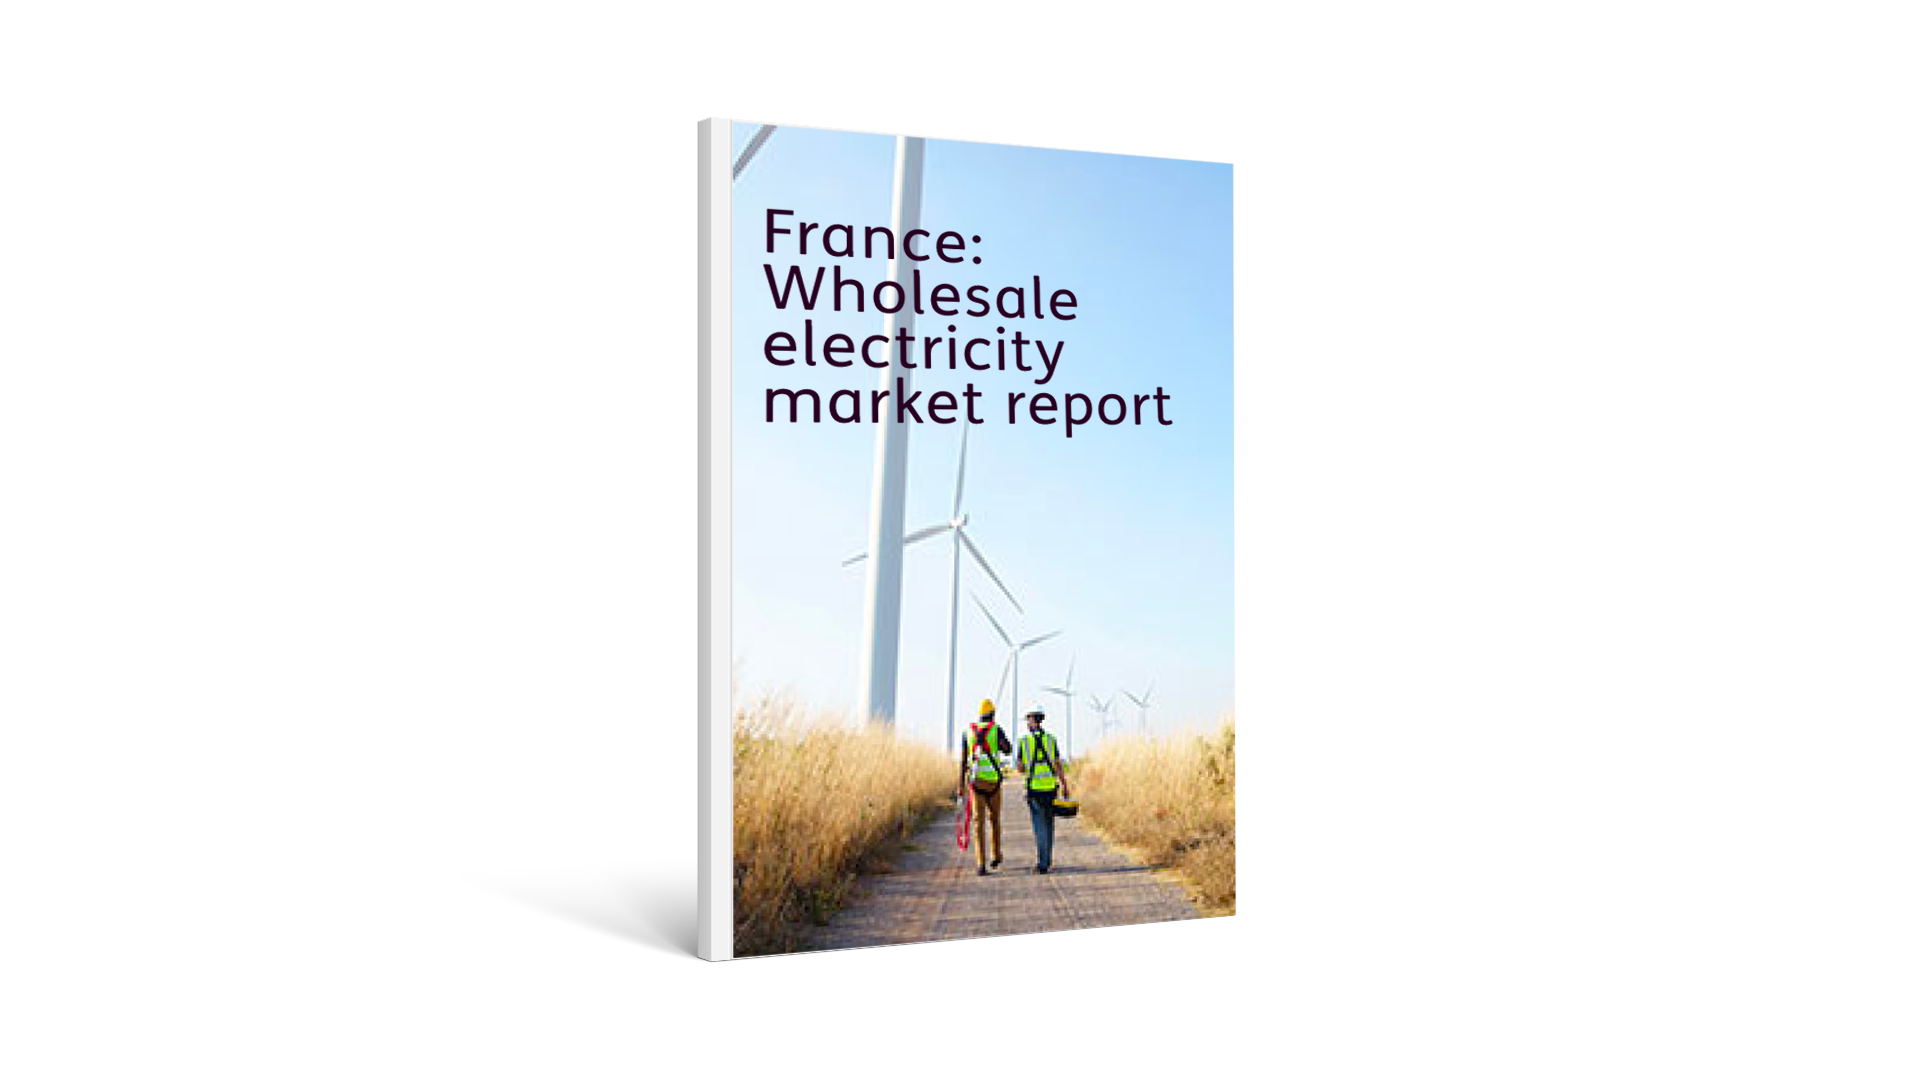 France: Wholesale electricity market report